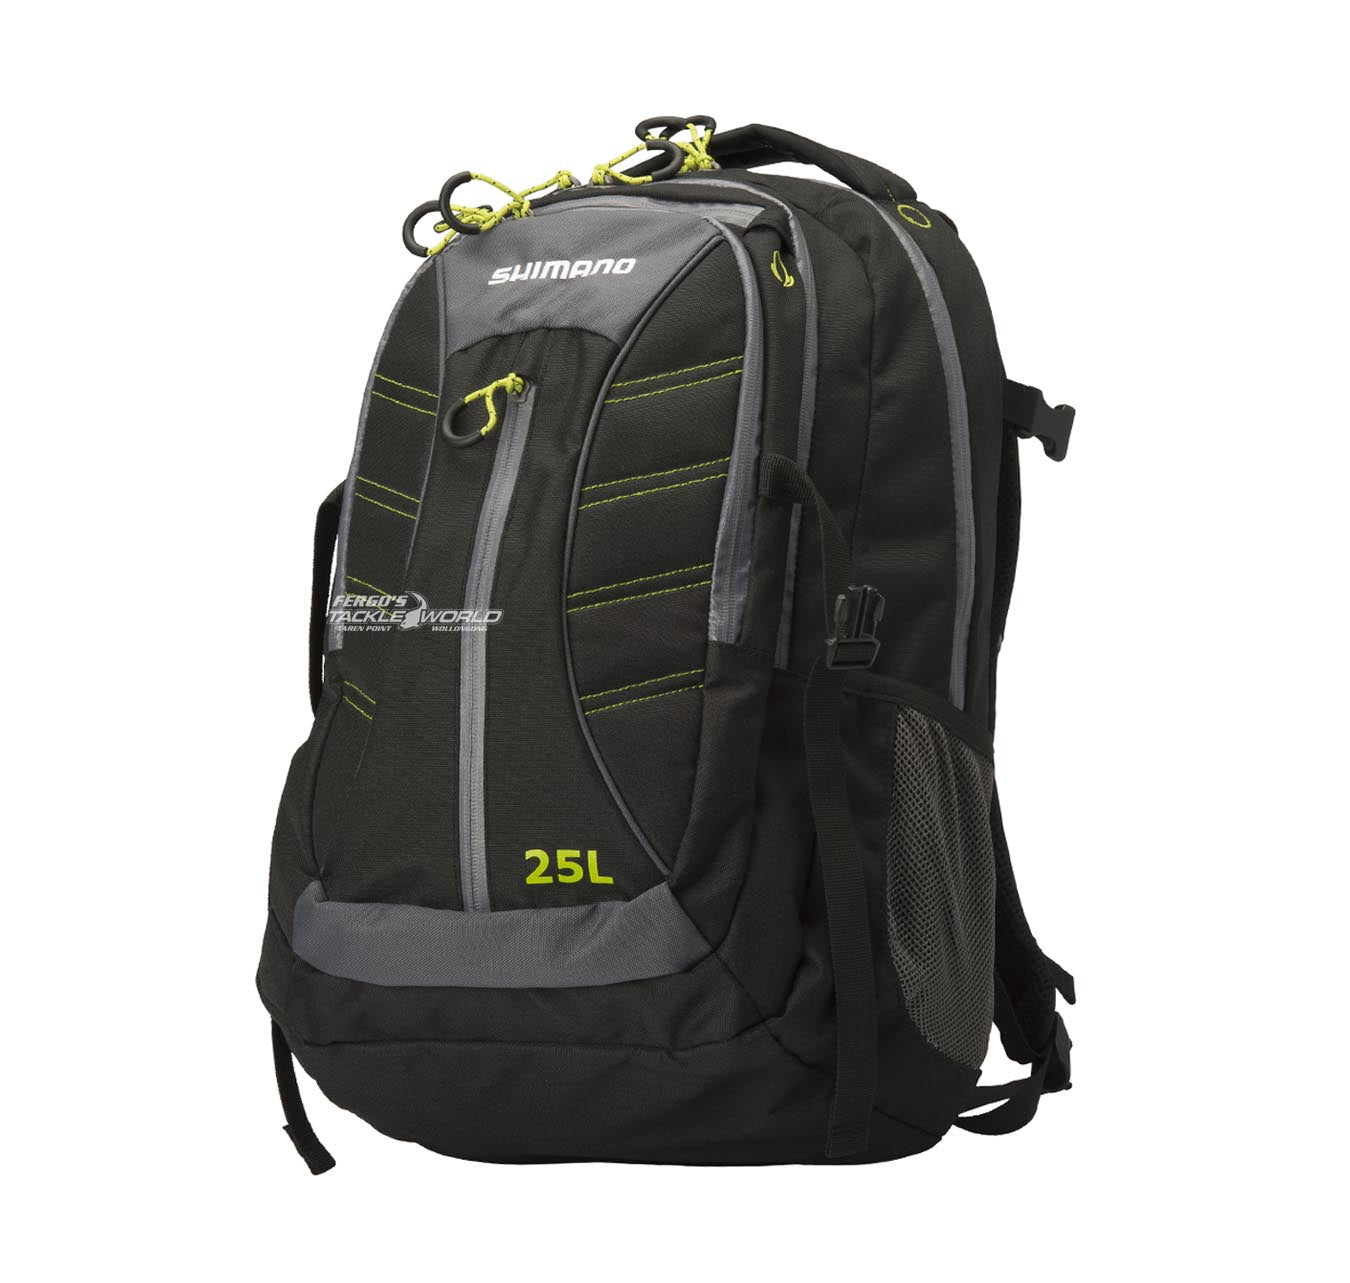 Shimano Backpack 25L - Fergo's Tackle World